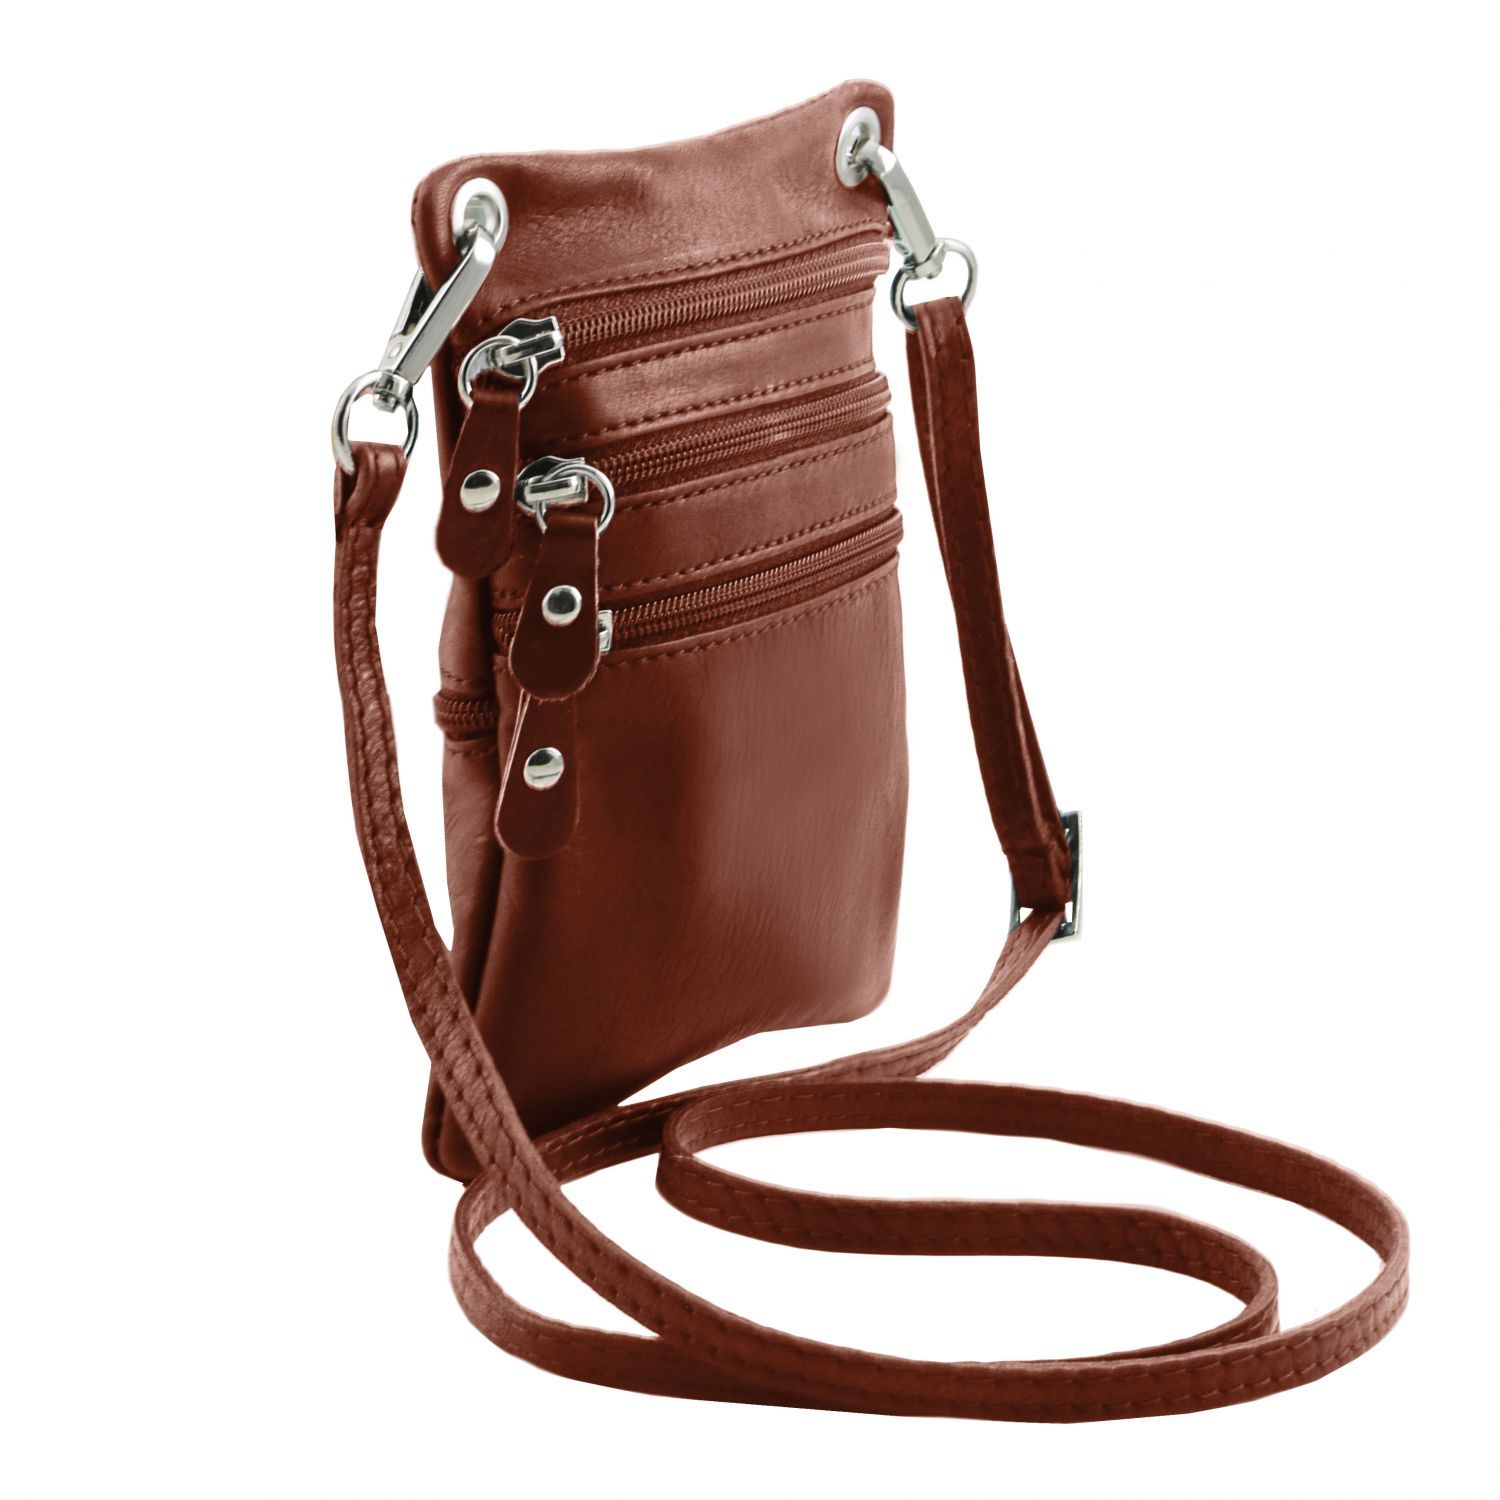 Saffiano Leather 15.4 Laptop Briefcase - Palermo - Domini Leather